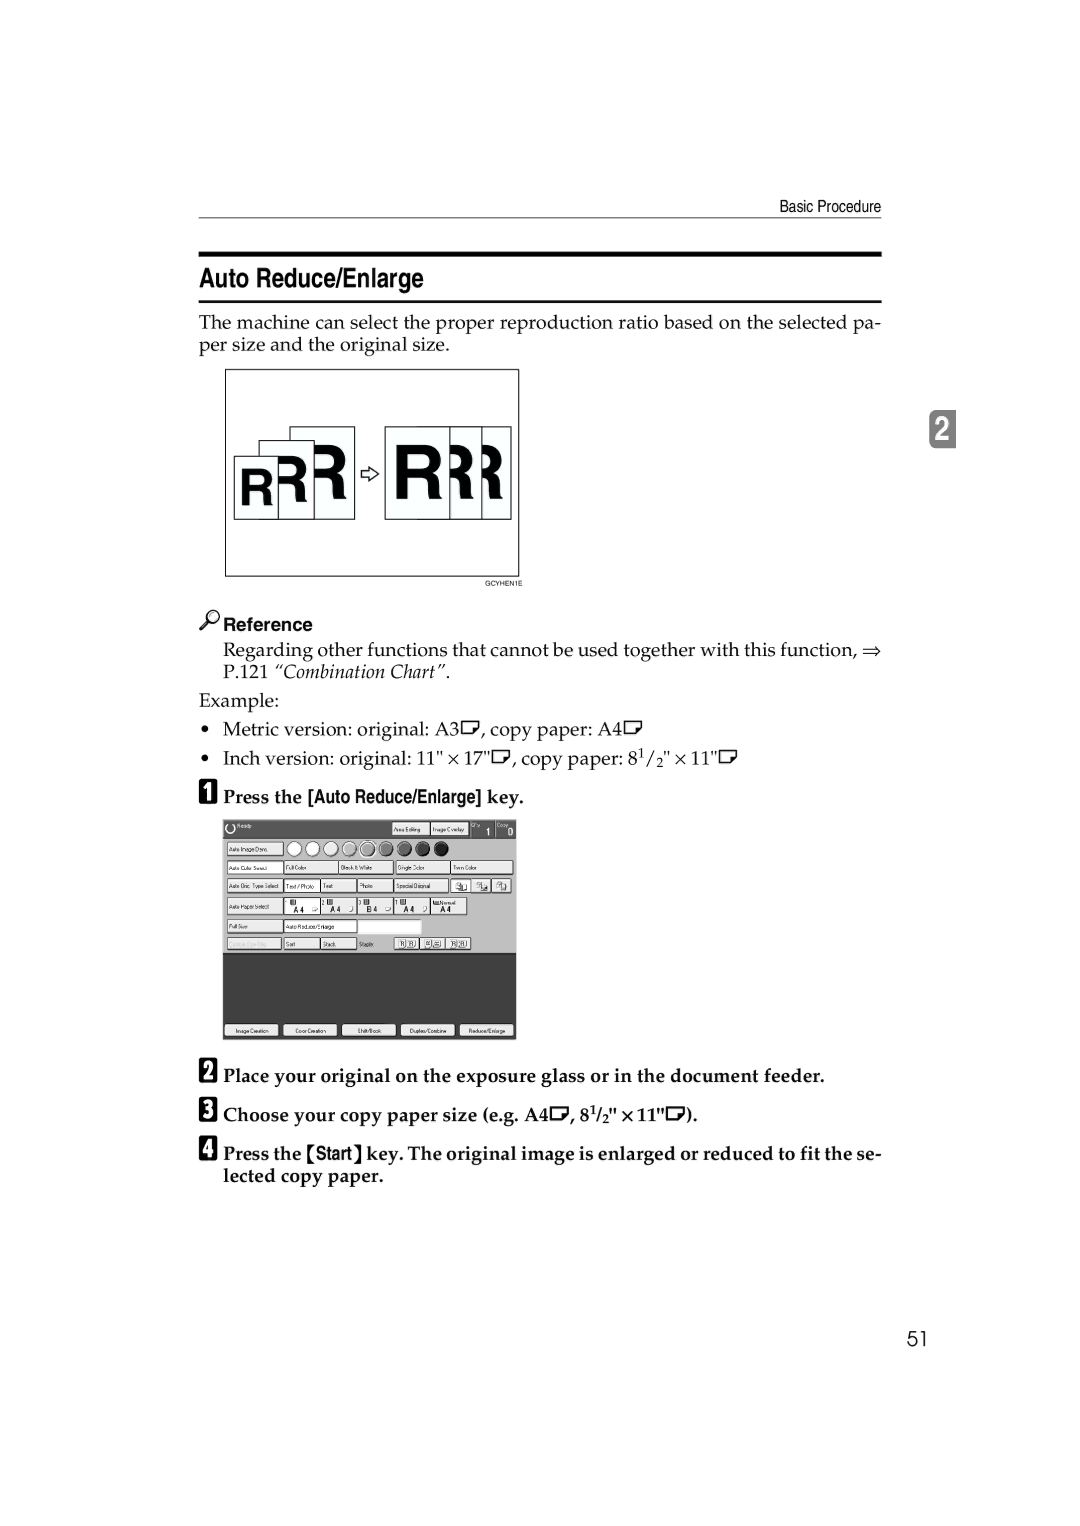 Ricoh 6513 manual Press the Auto Reduce/Enlarge key 